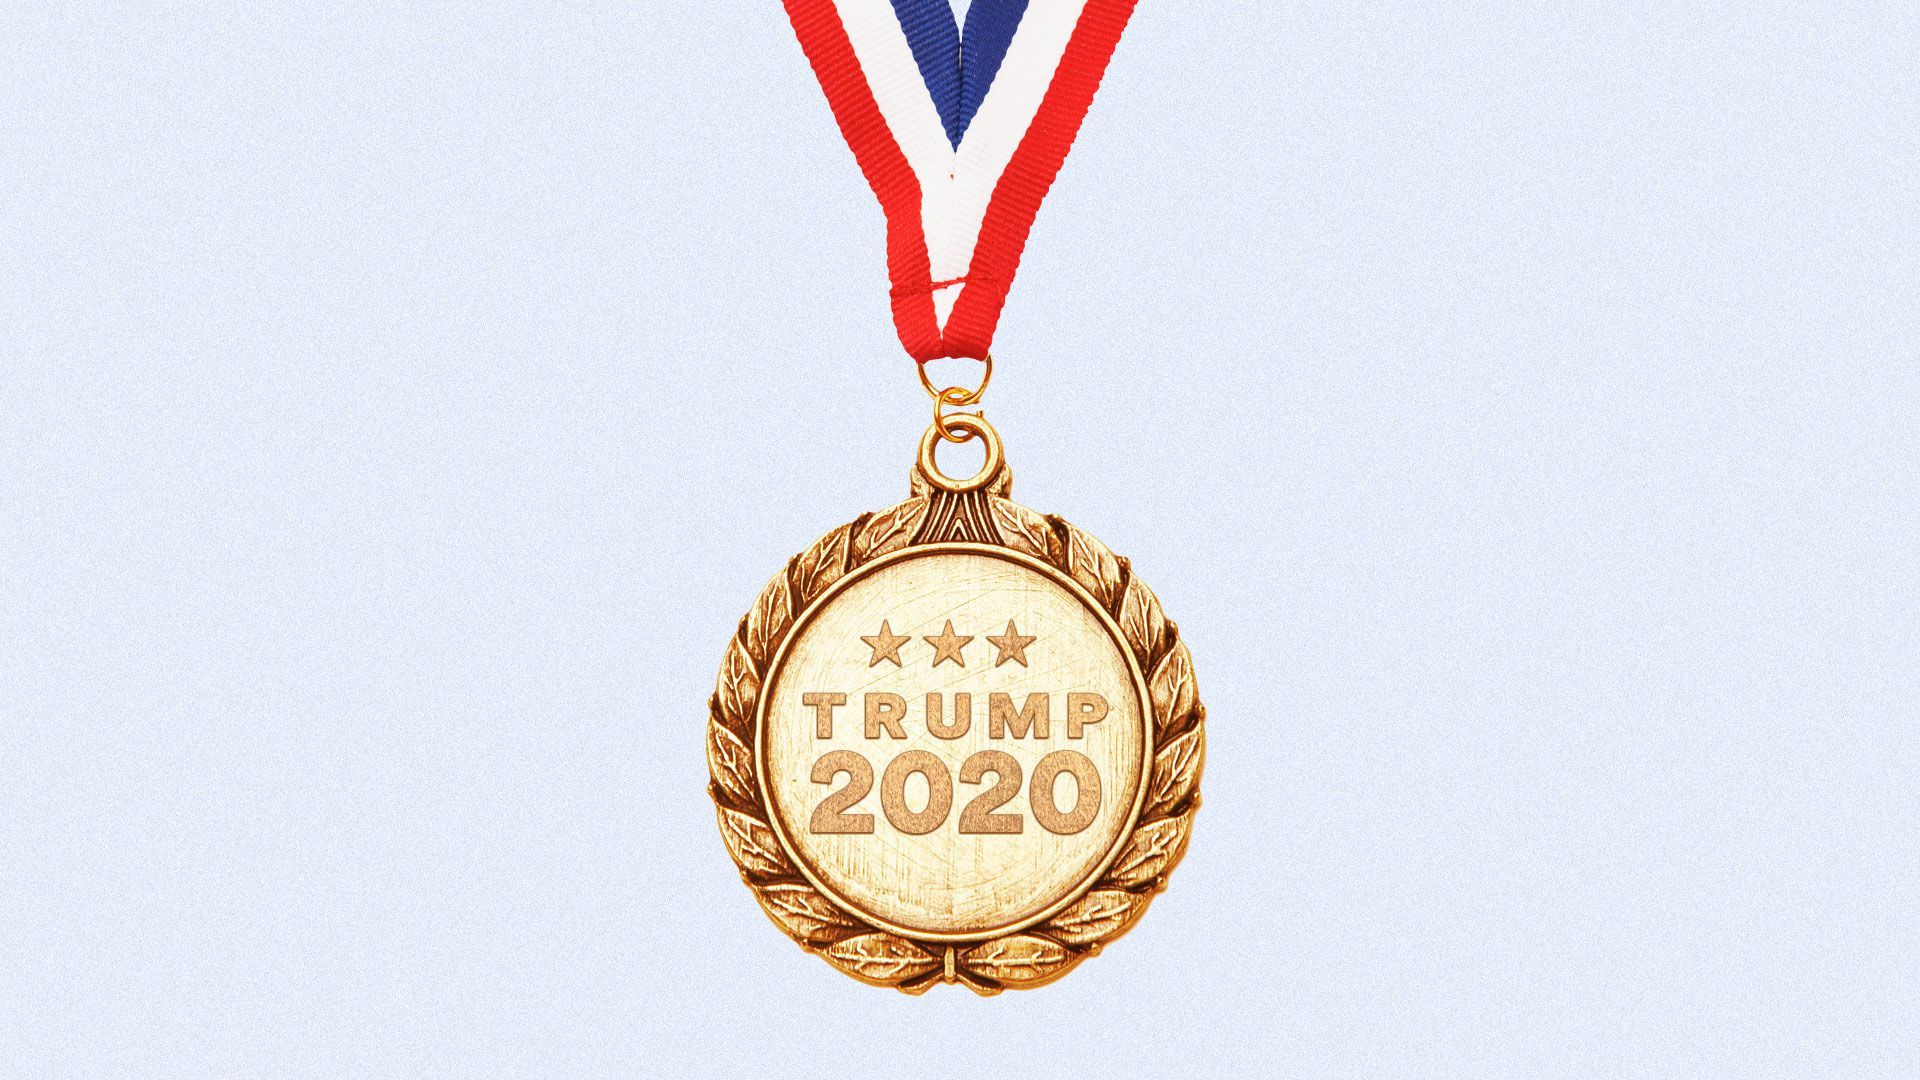 Trump 2020 illustration